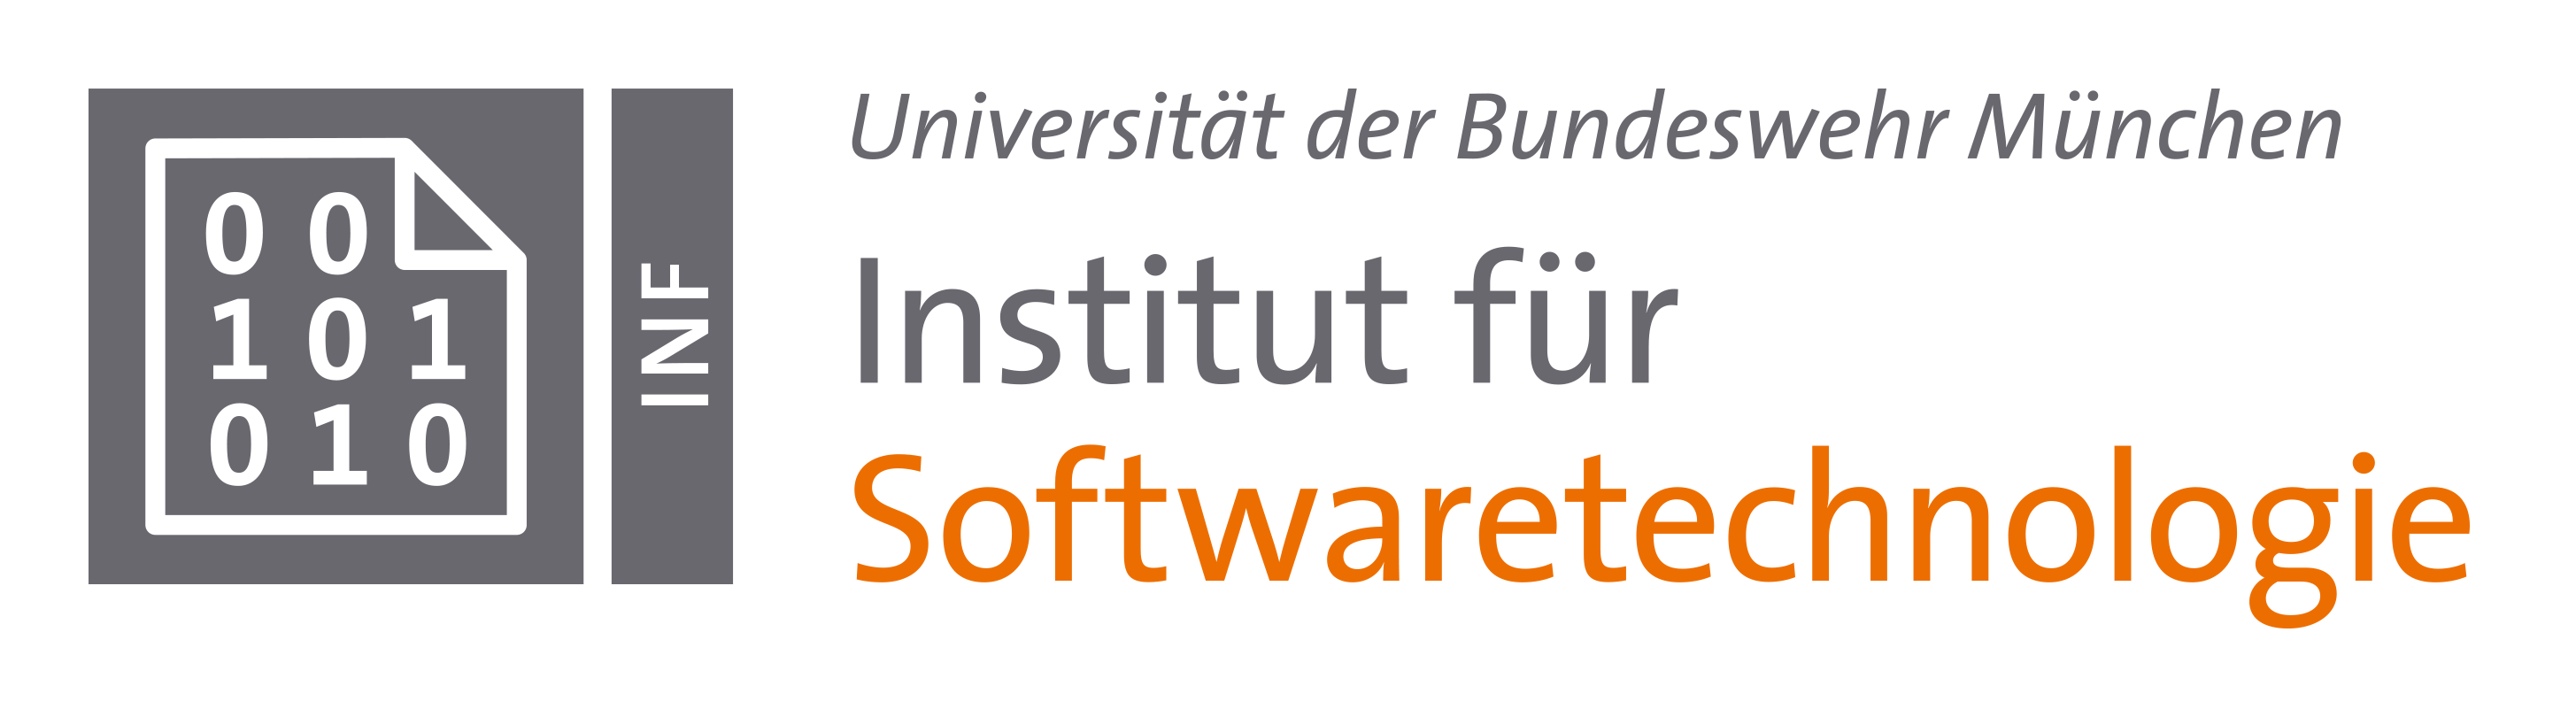 UniBwM_Softwaretechnologie.png